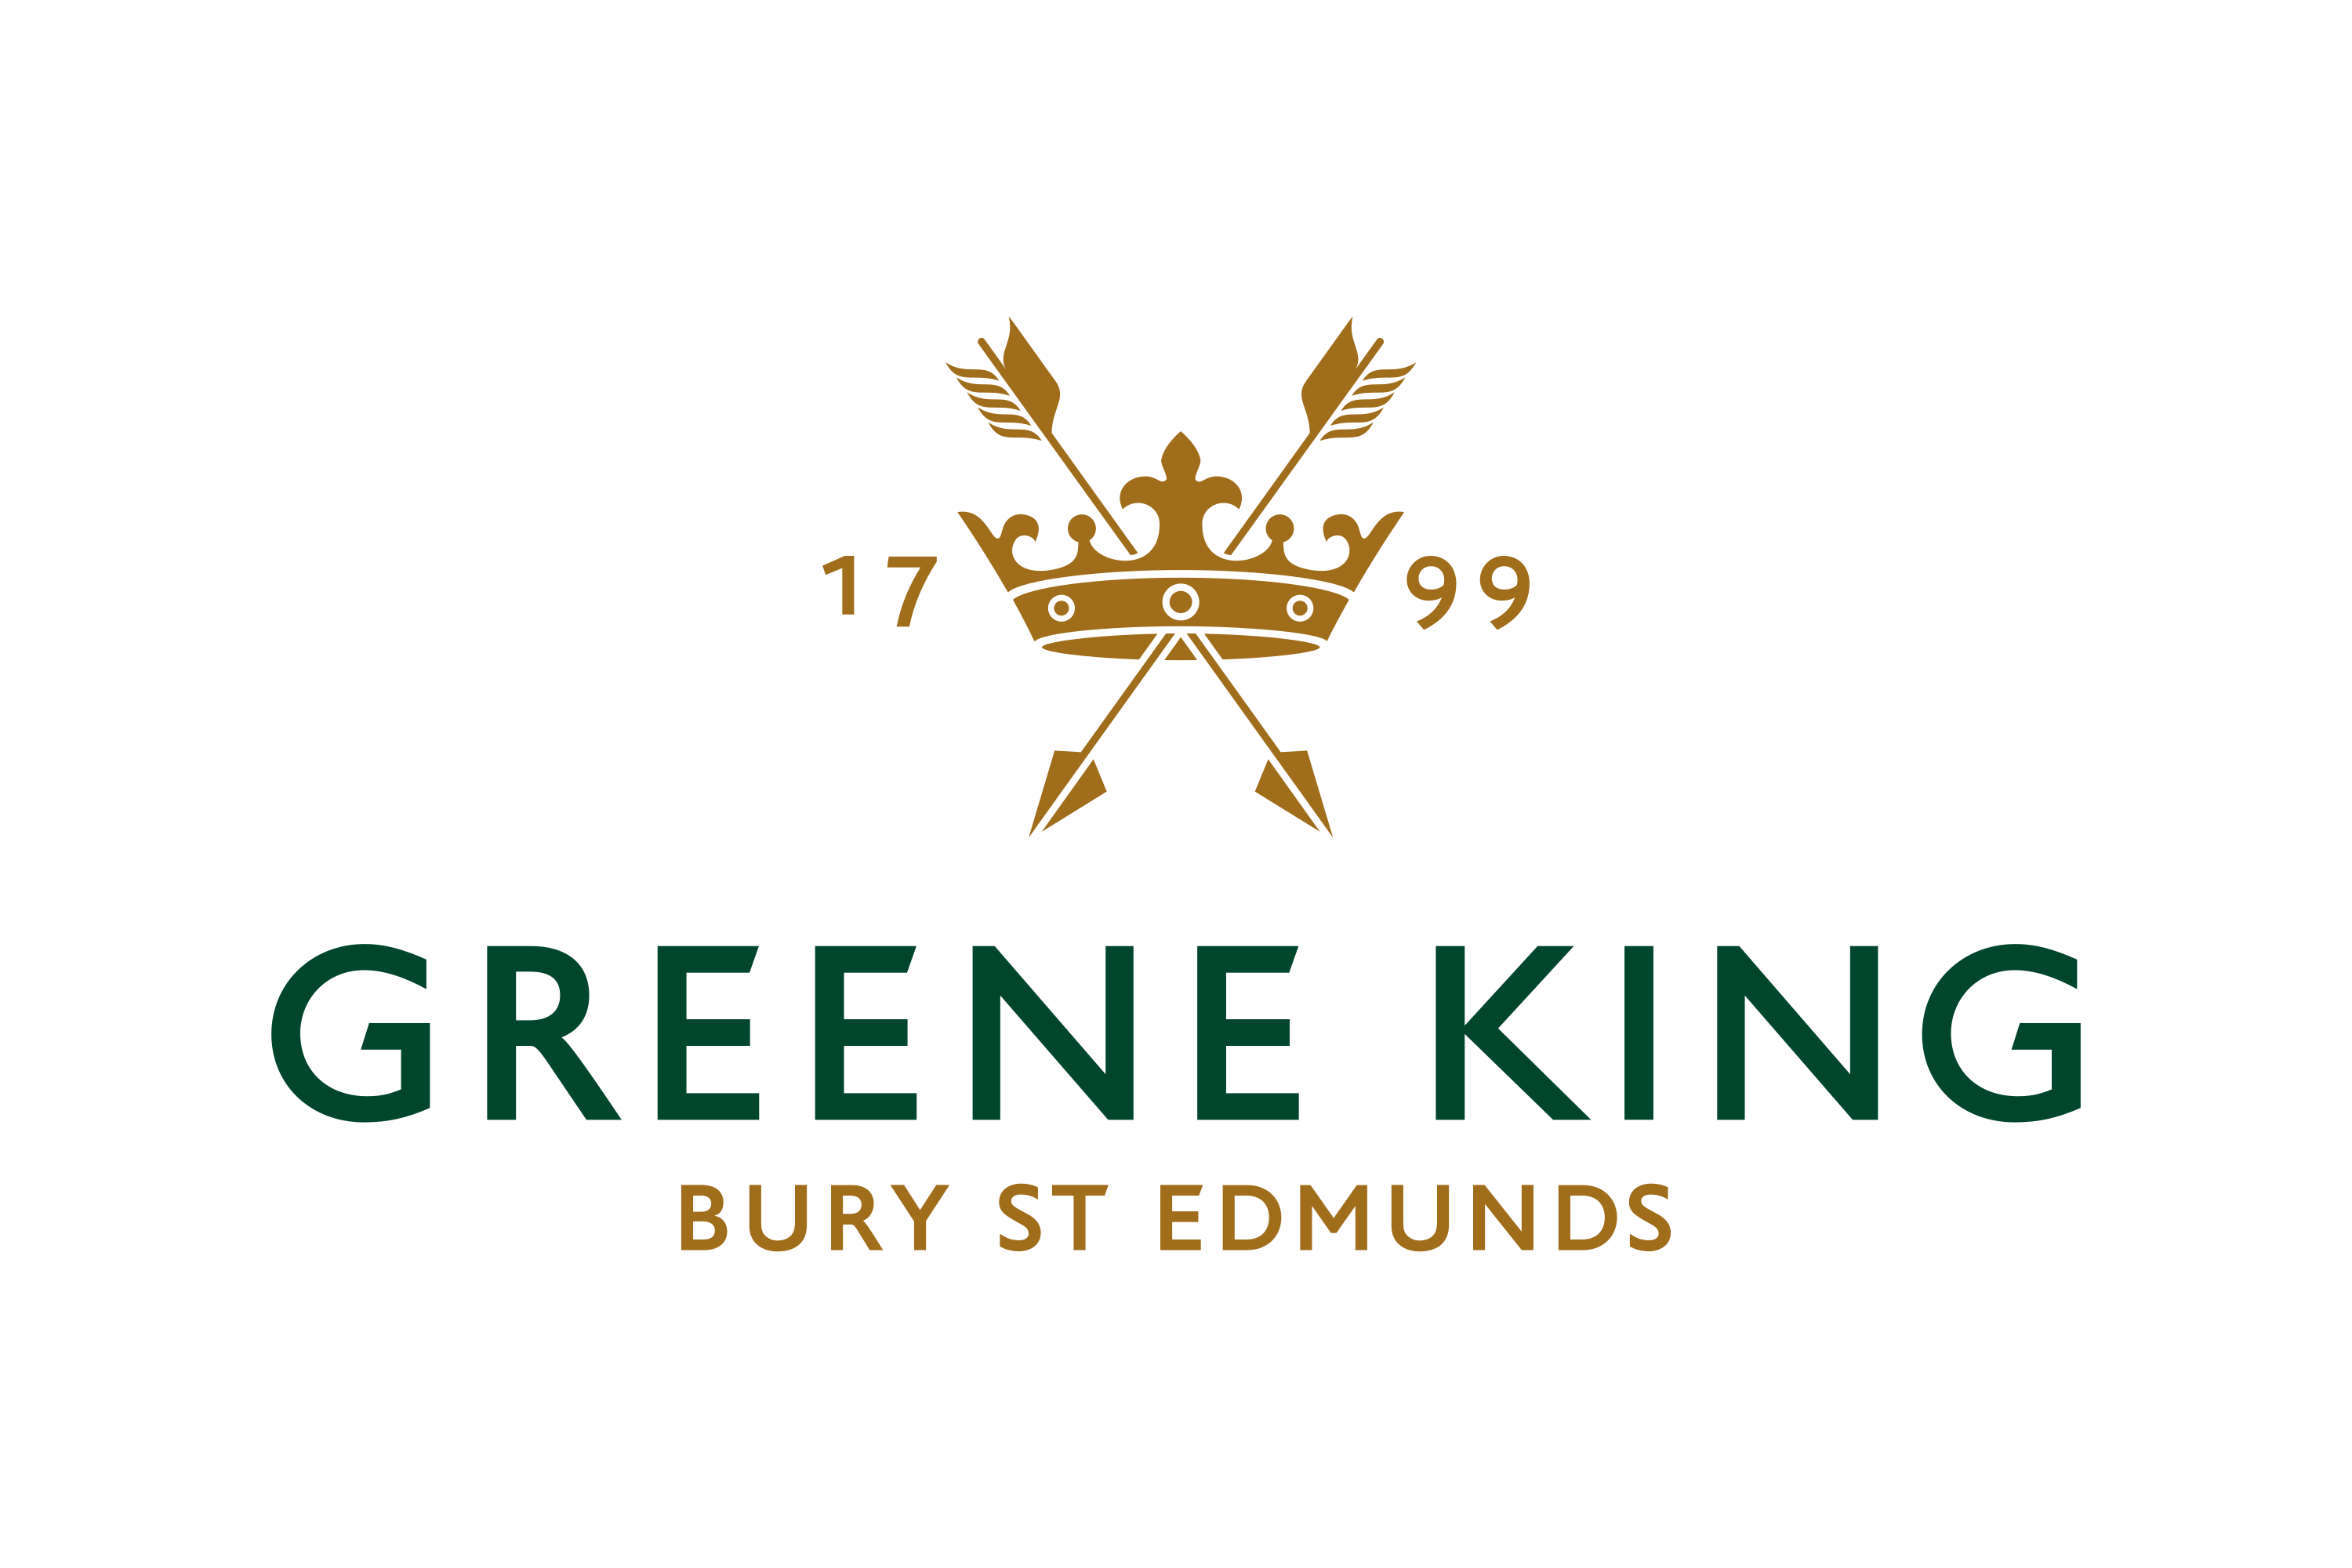 Download Greene King Logo in SVG Vector or PNG File Format 